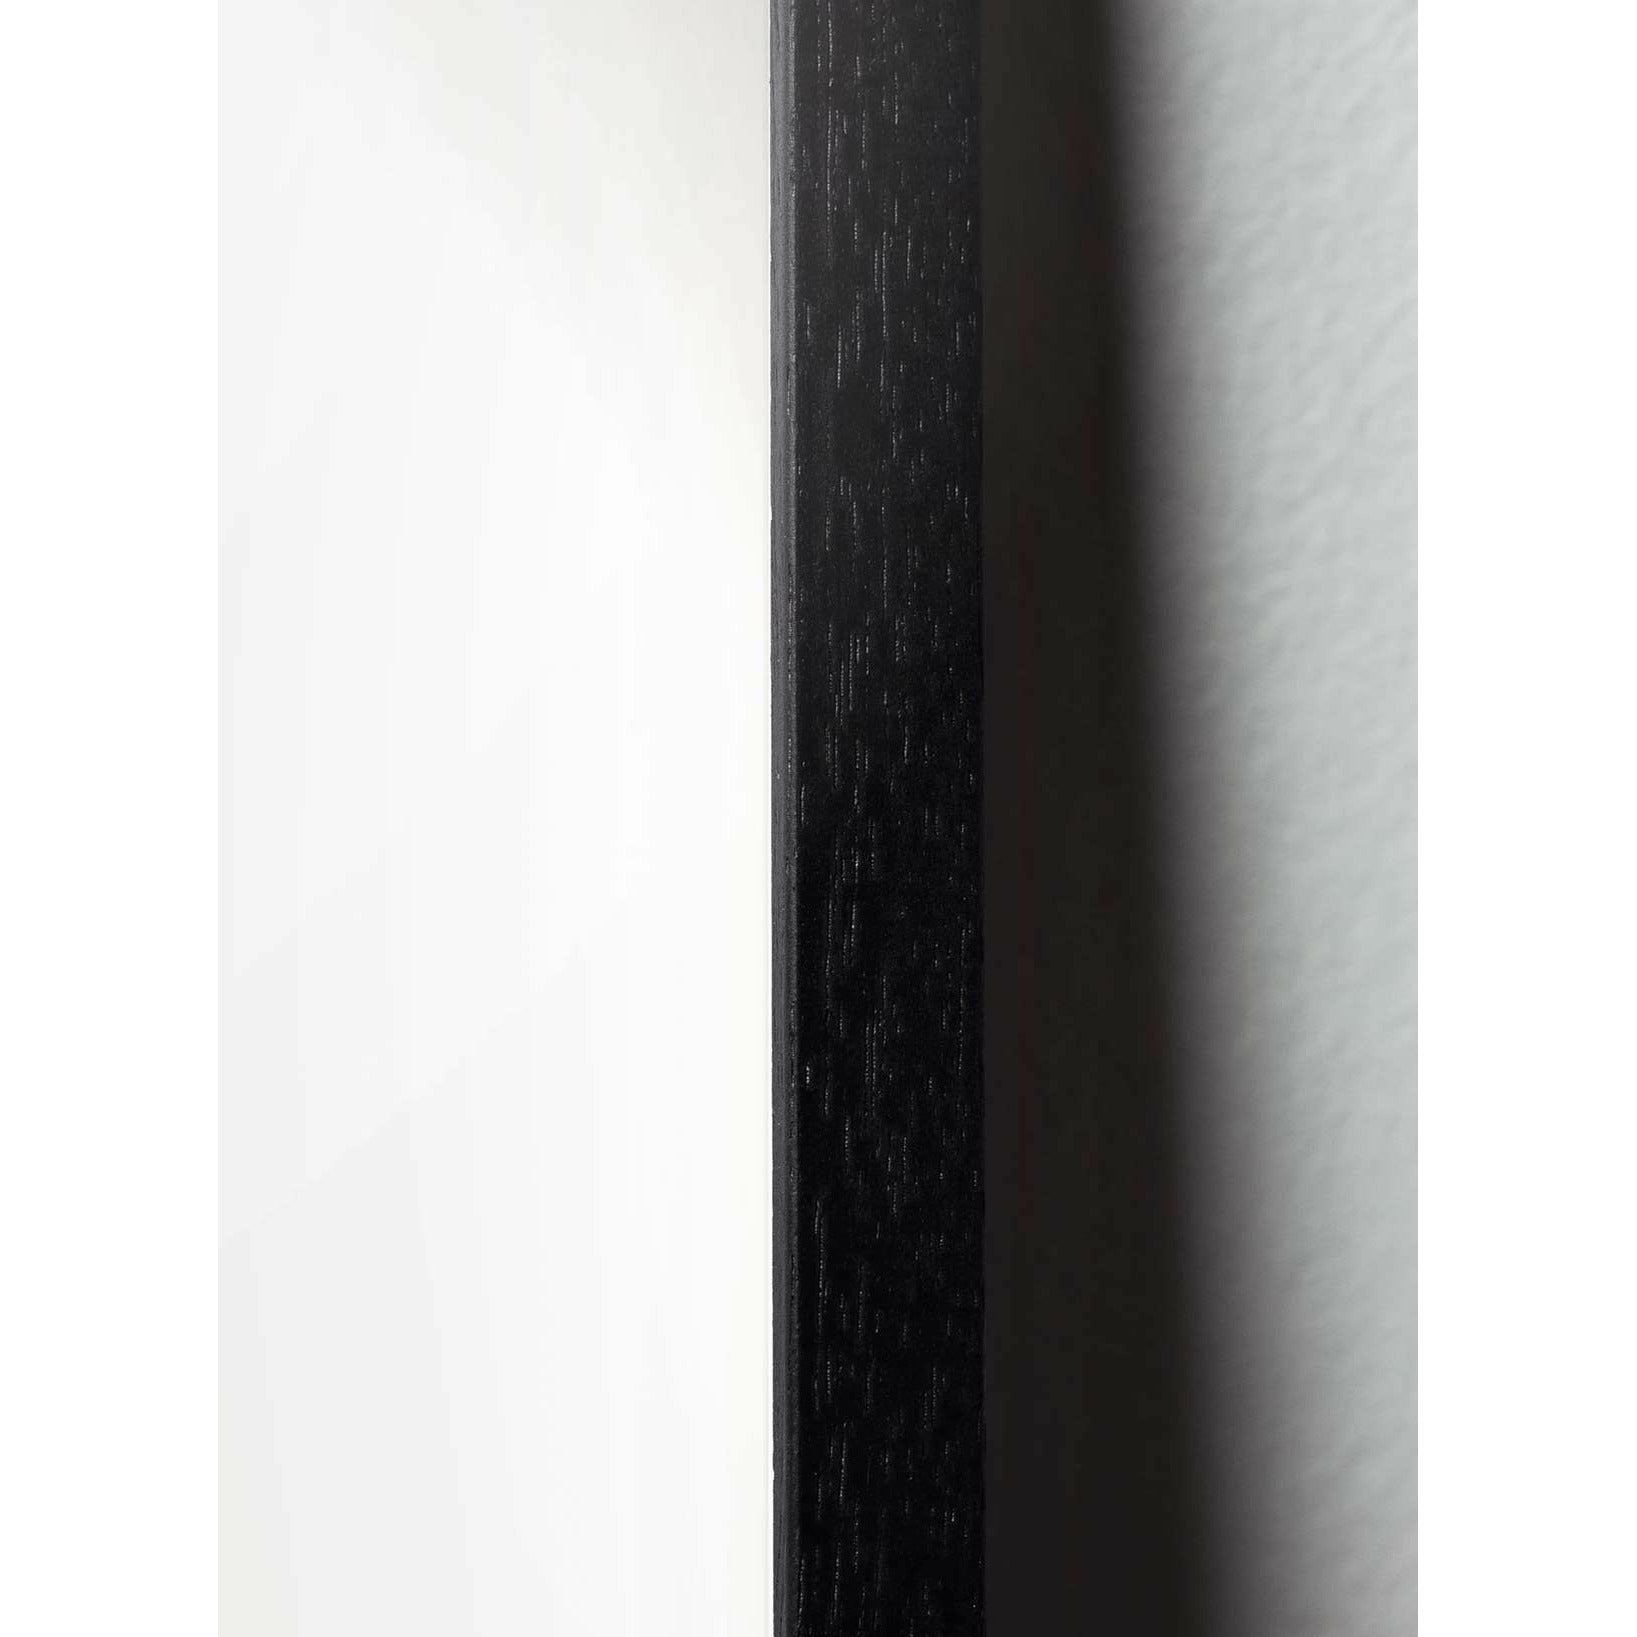 Brainchild Vinter bra klassisk affisch, ram i svart -målat trä 50x70 cm, lila bakgrund